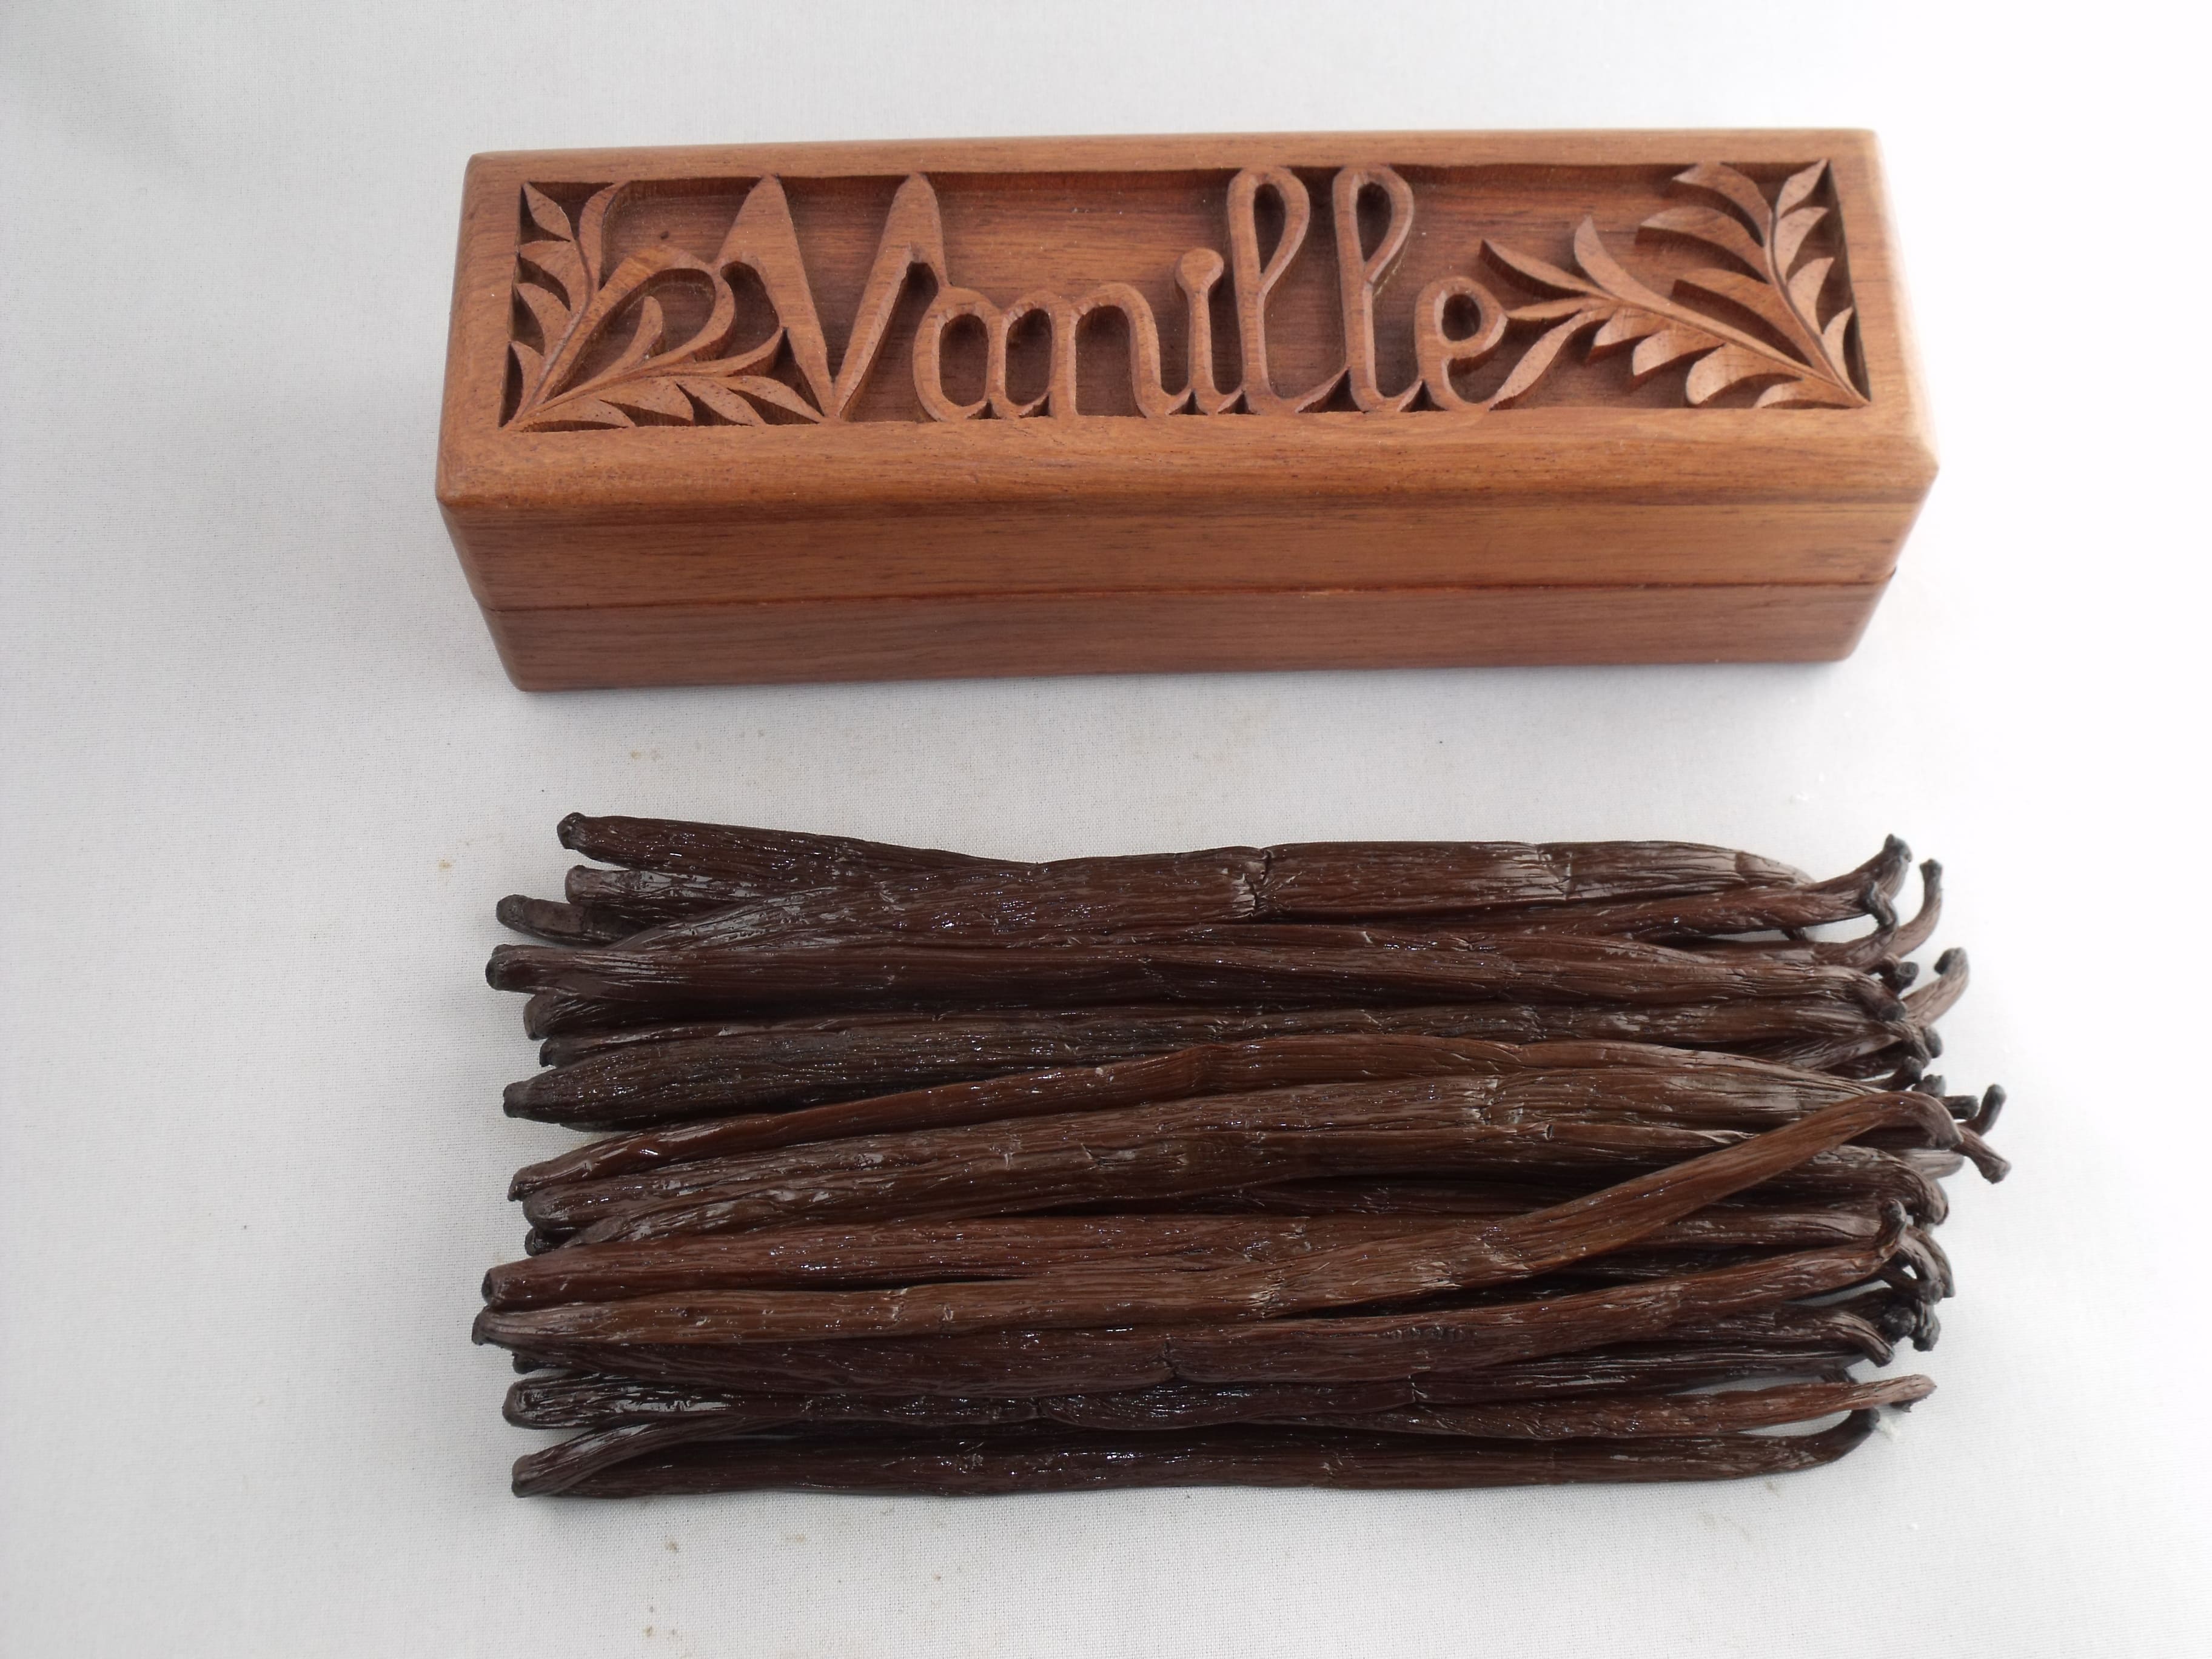 vanilla from Madagascar